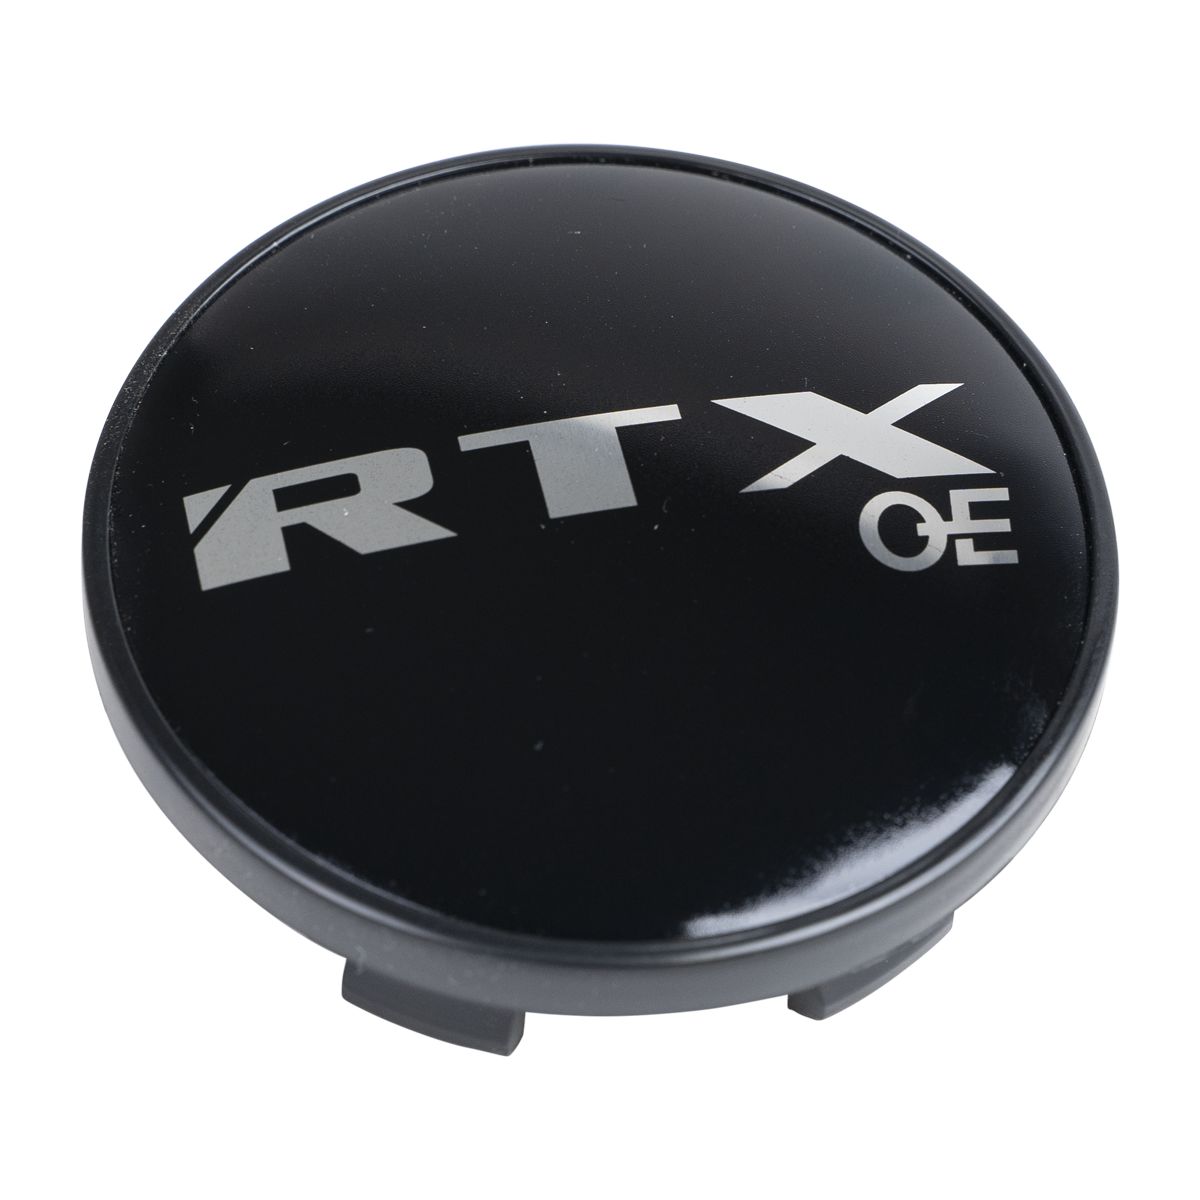 RTXoe 9096K62OEB - Center Cap Gloss Black RTXoe Chrome Black Background